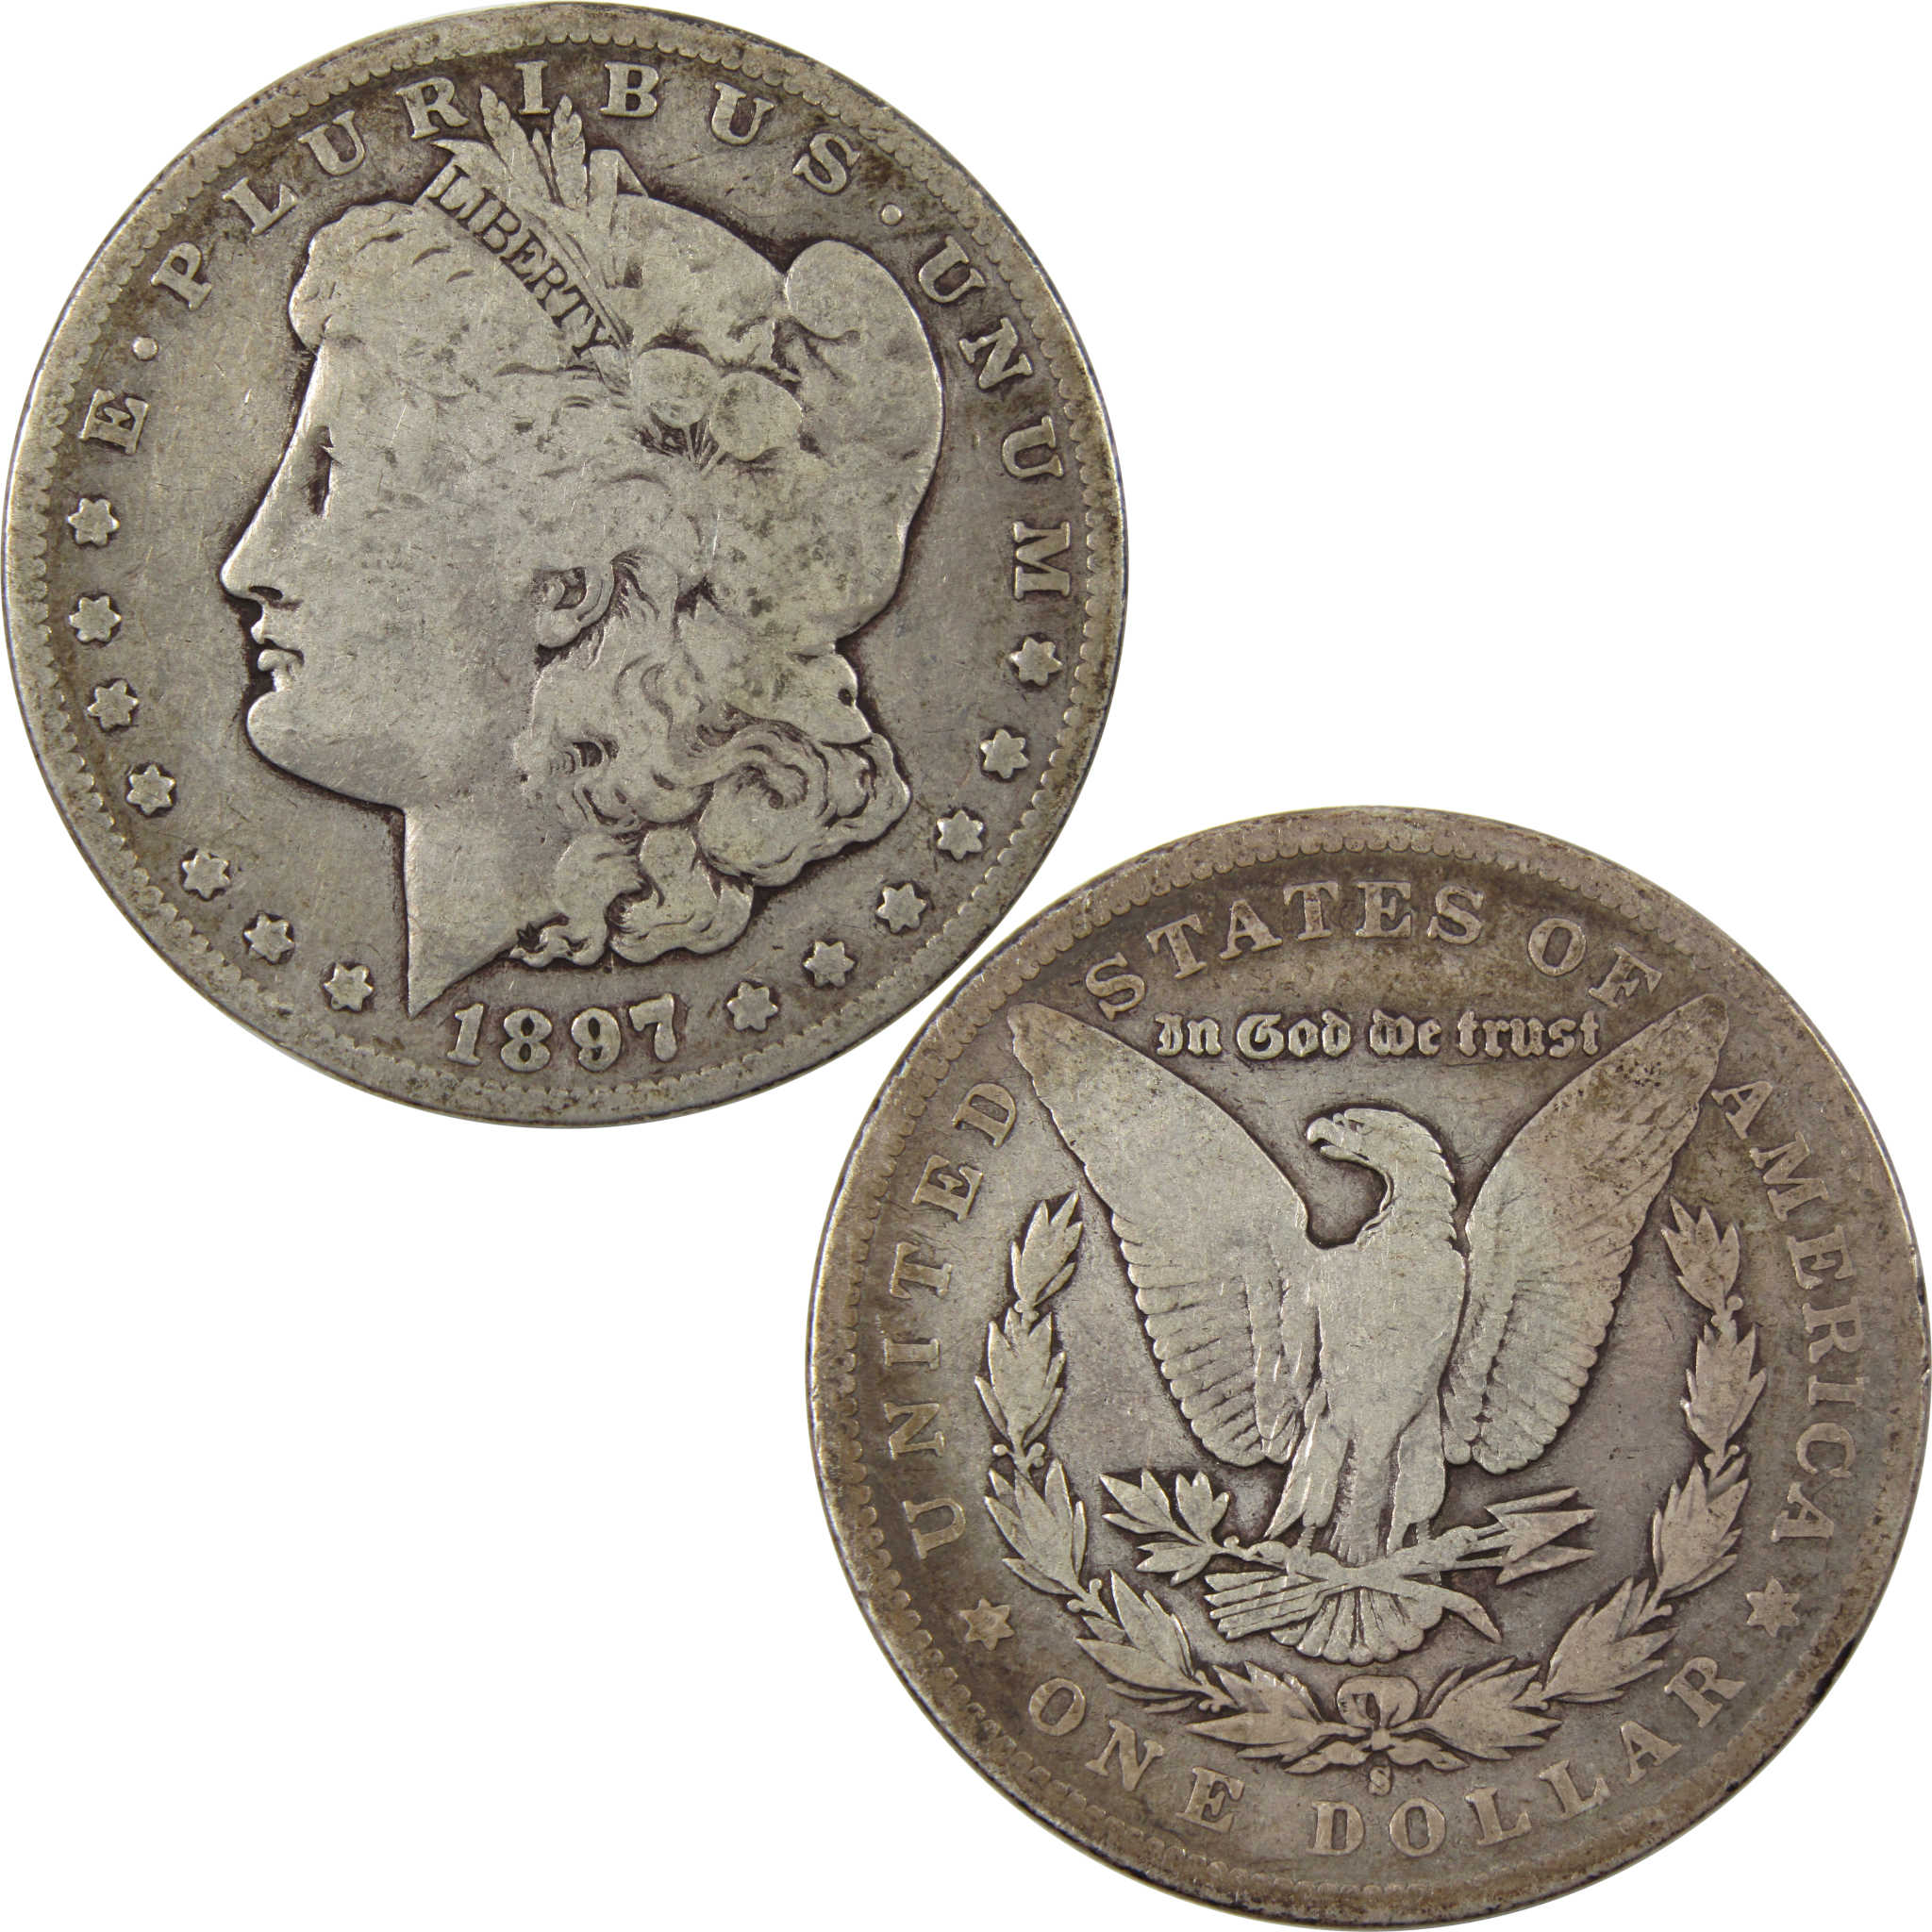 1897 S Morgan Dollar VG Very Good Silver $1 Coin SKU:I10211 - Morgan coin - Morgan silver dollar - Morgan silver dollar for sale - Profile Coins &amp; Collectibles